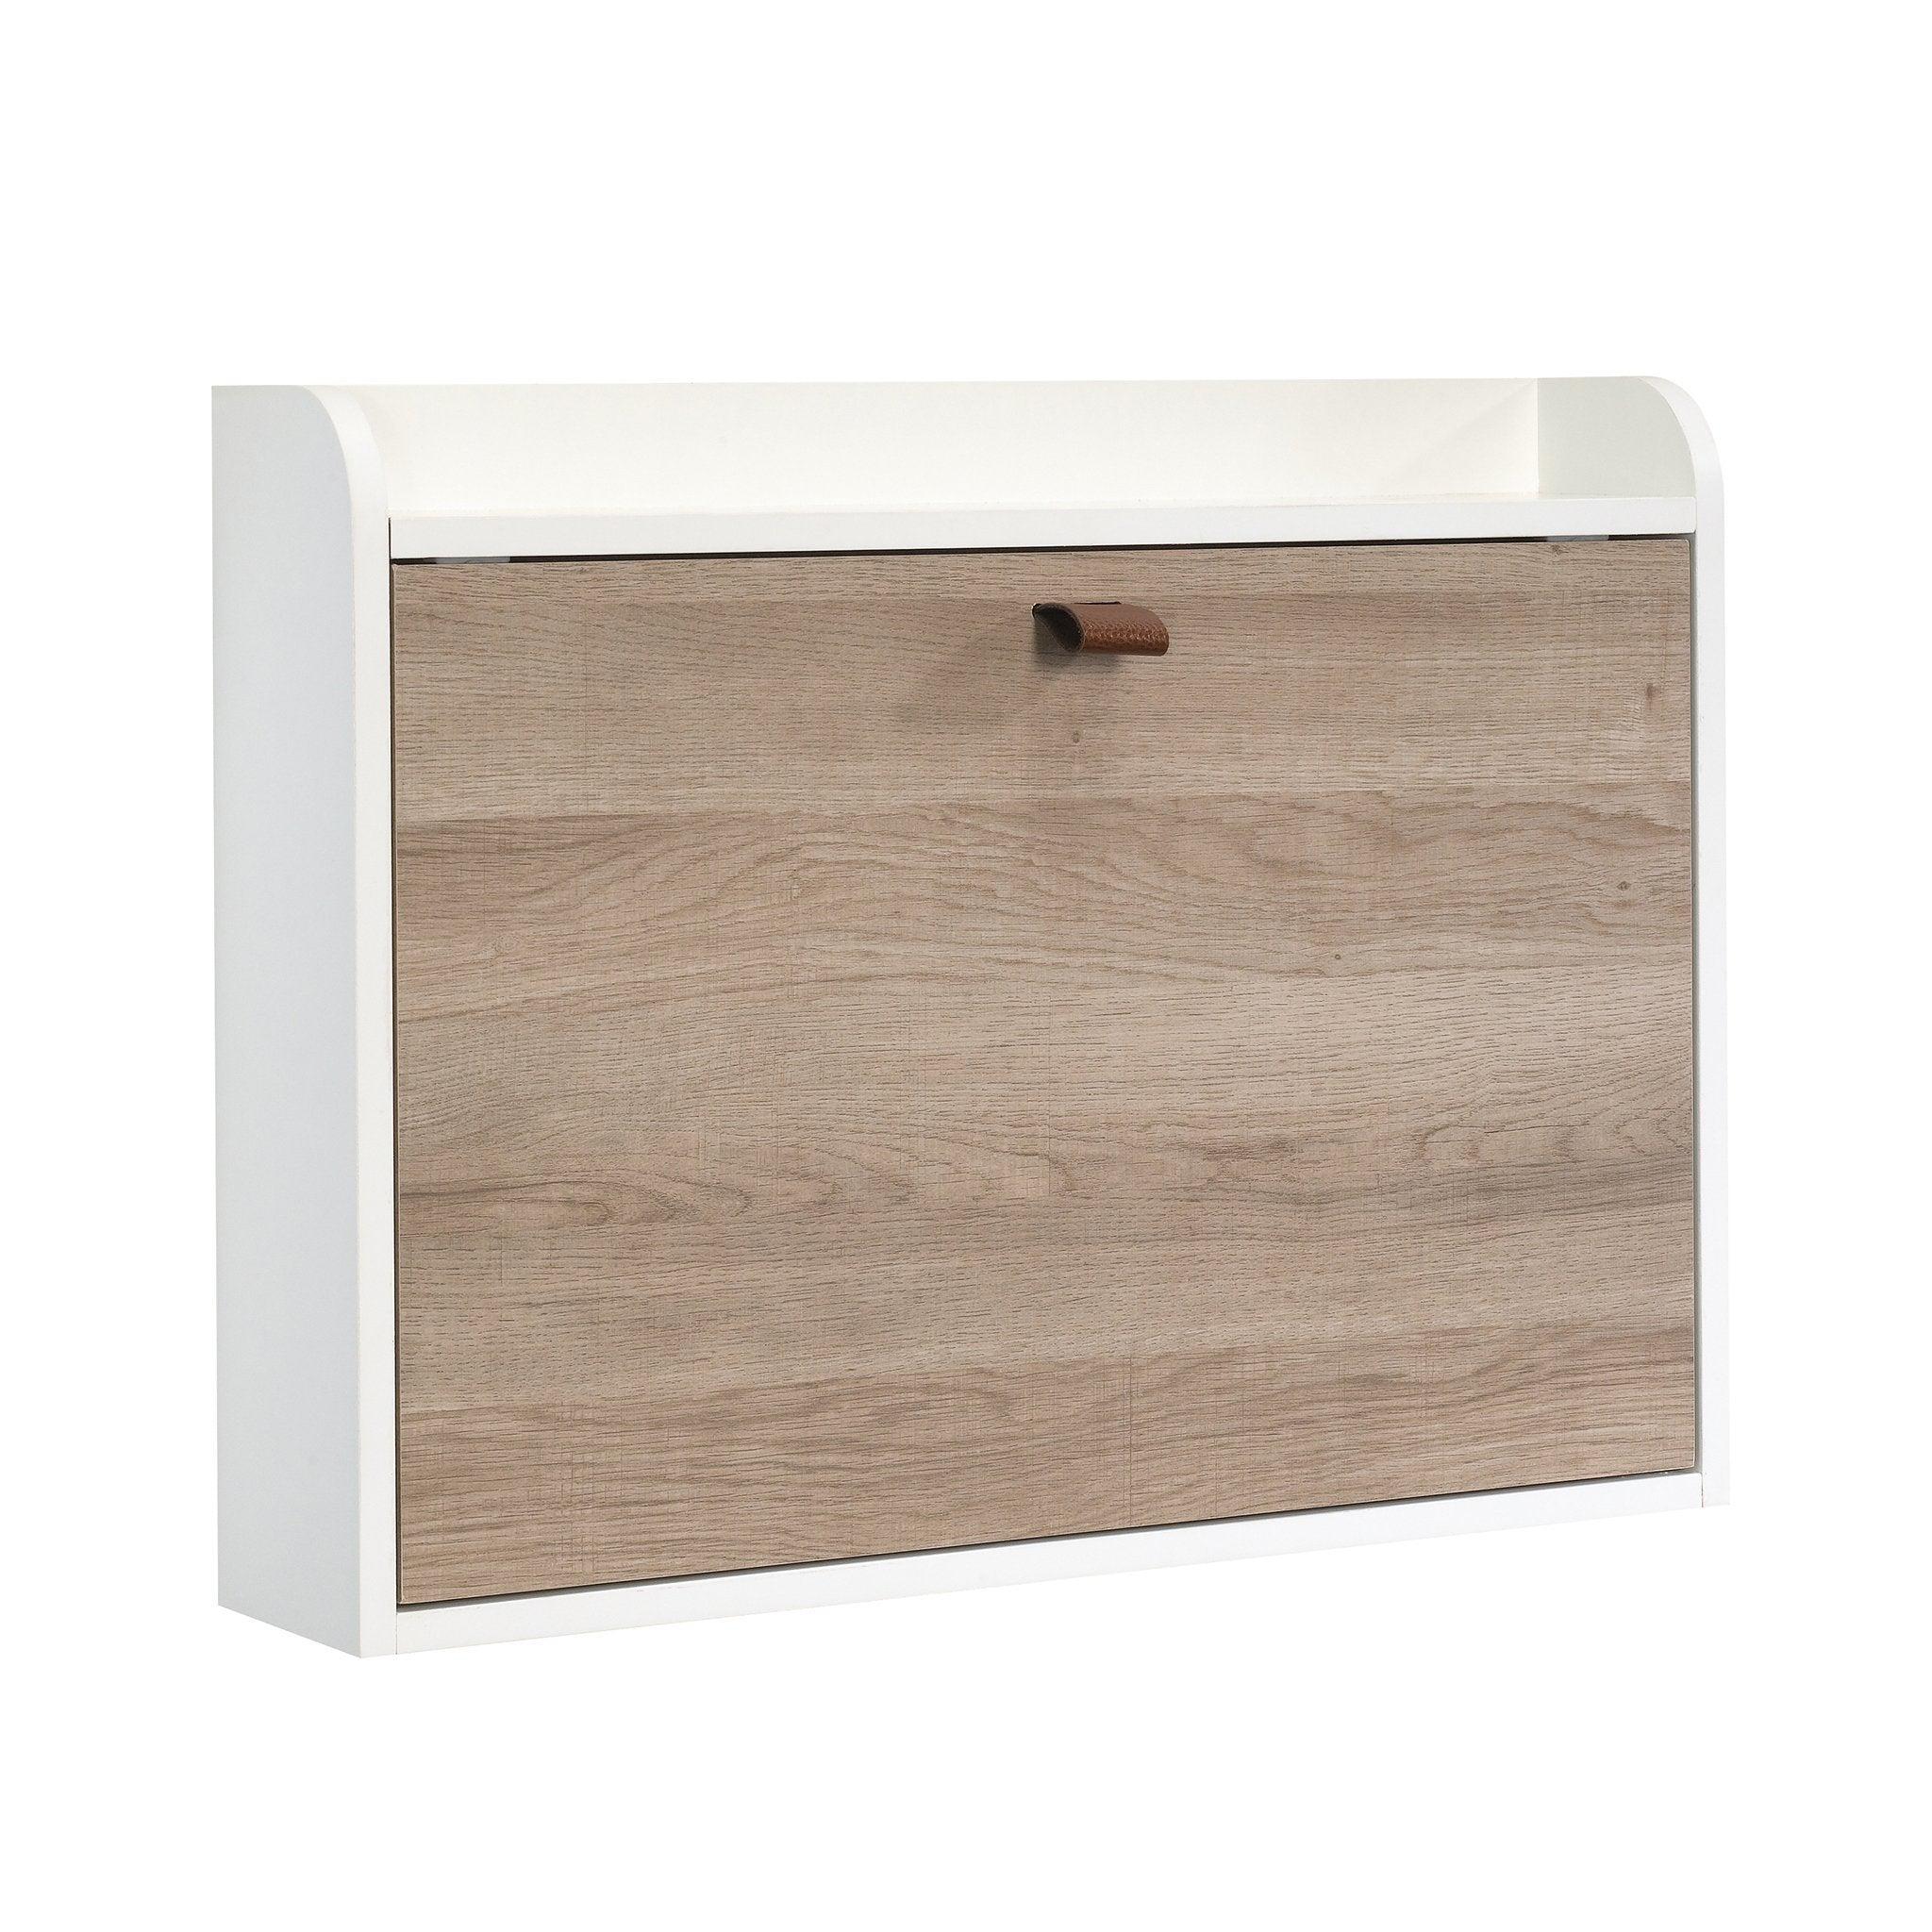 Avon leather handled foldaway wall desk - white - image 10